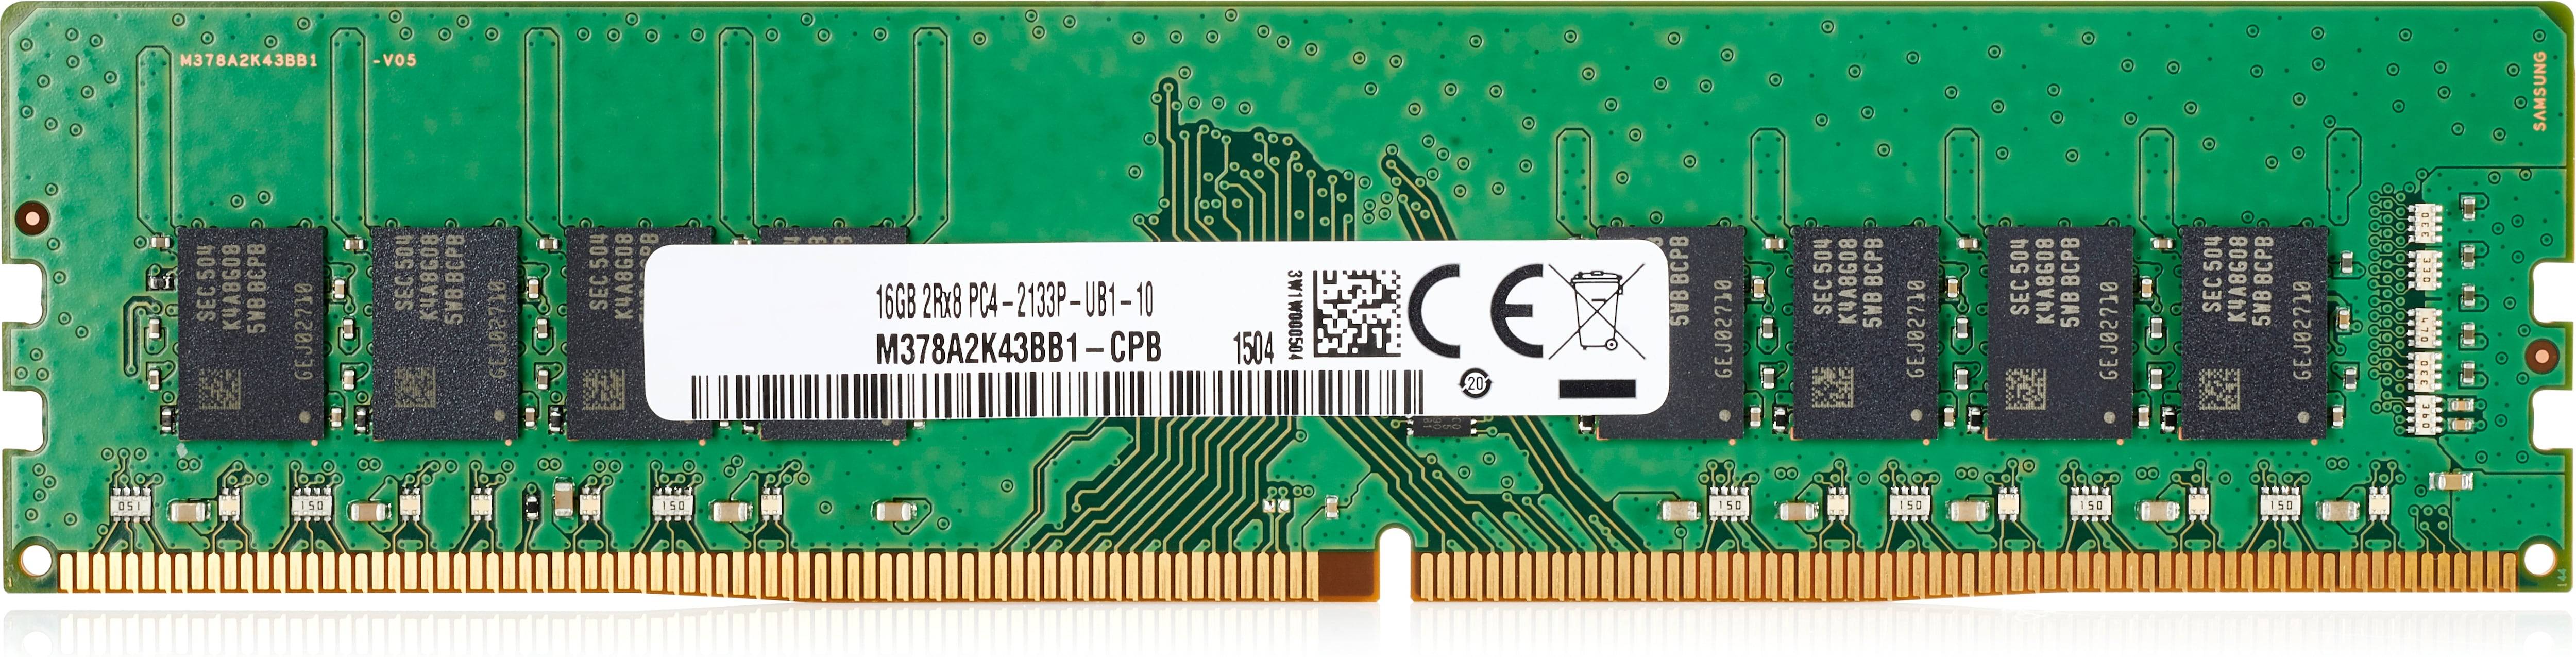 Rca Informatique - Image du produit : 8GB DDR4-3200 UDIMM .